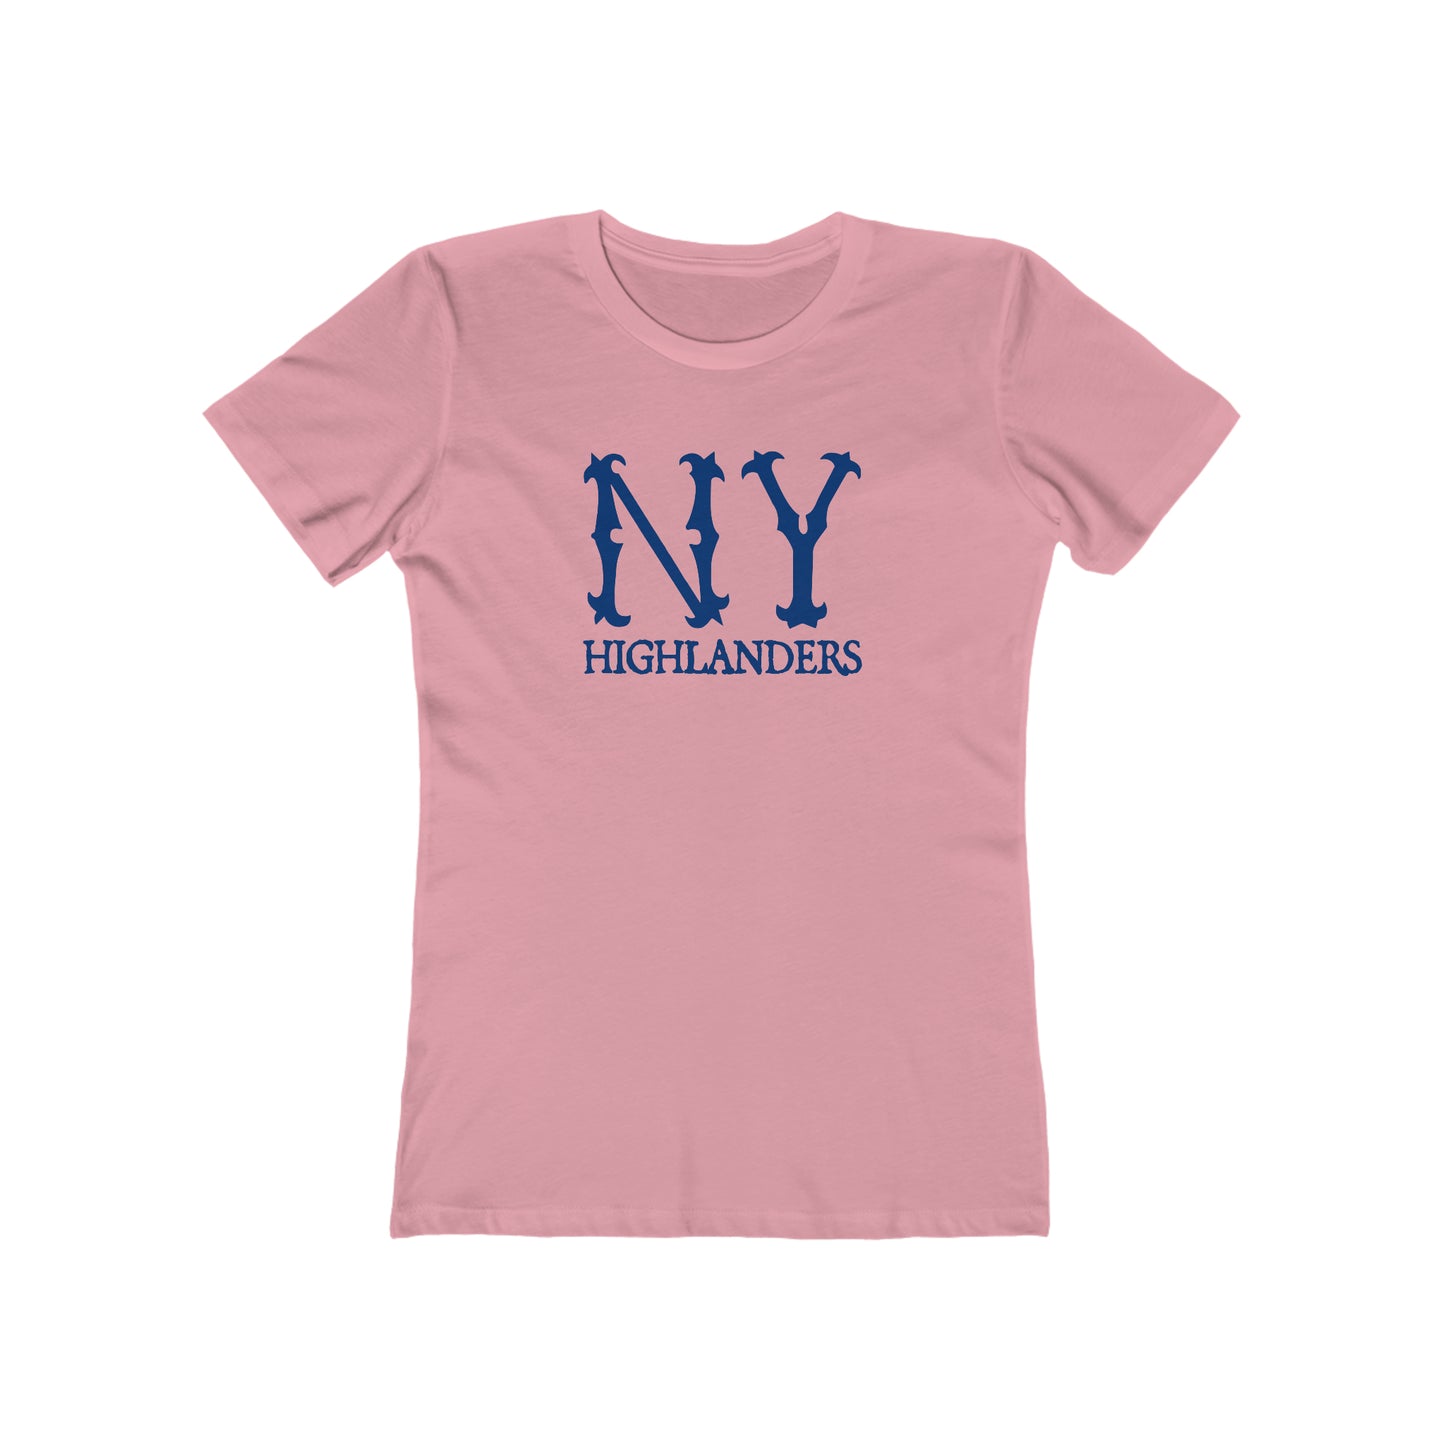 New York Highlanders 2 - Women's T-Shirt